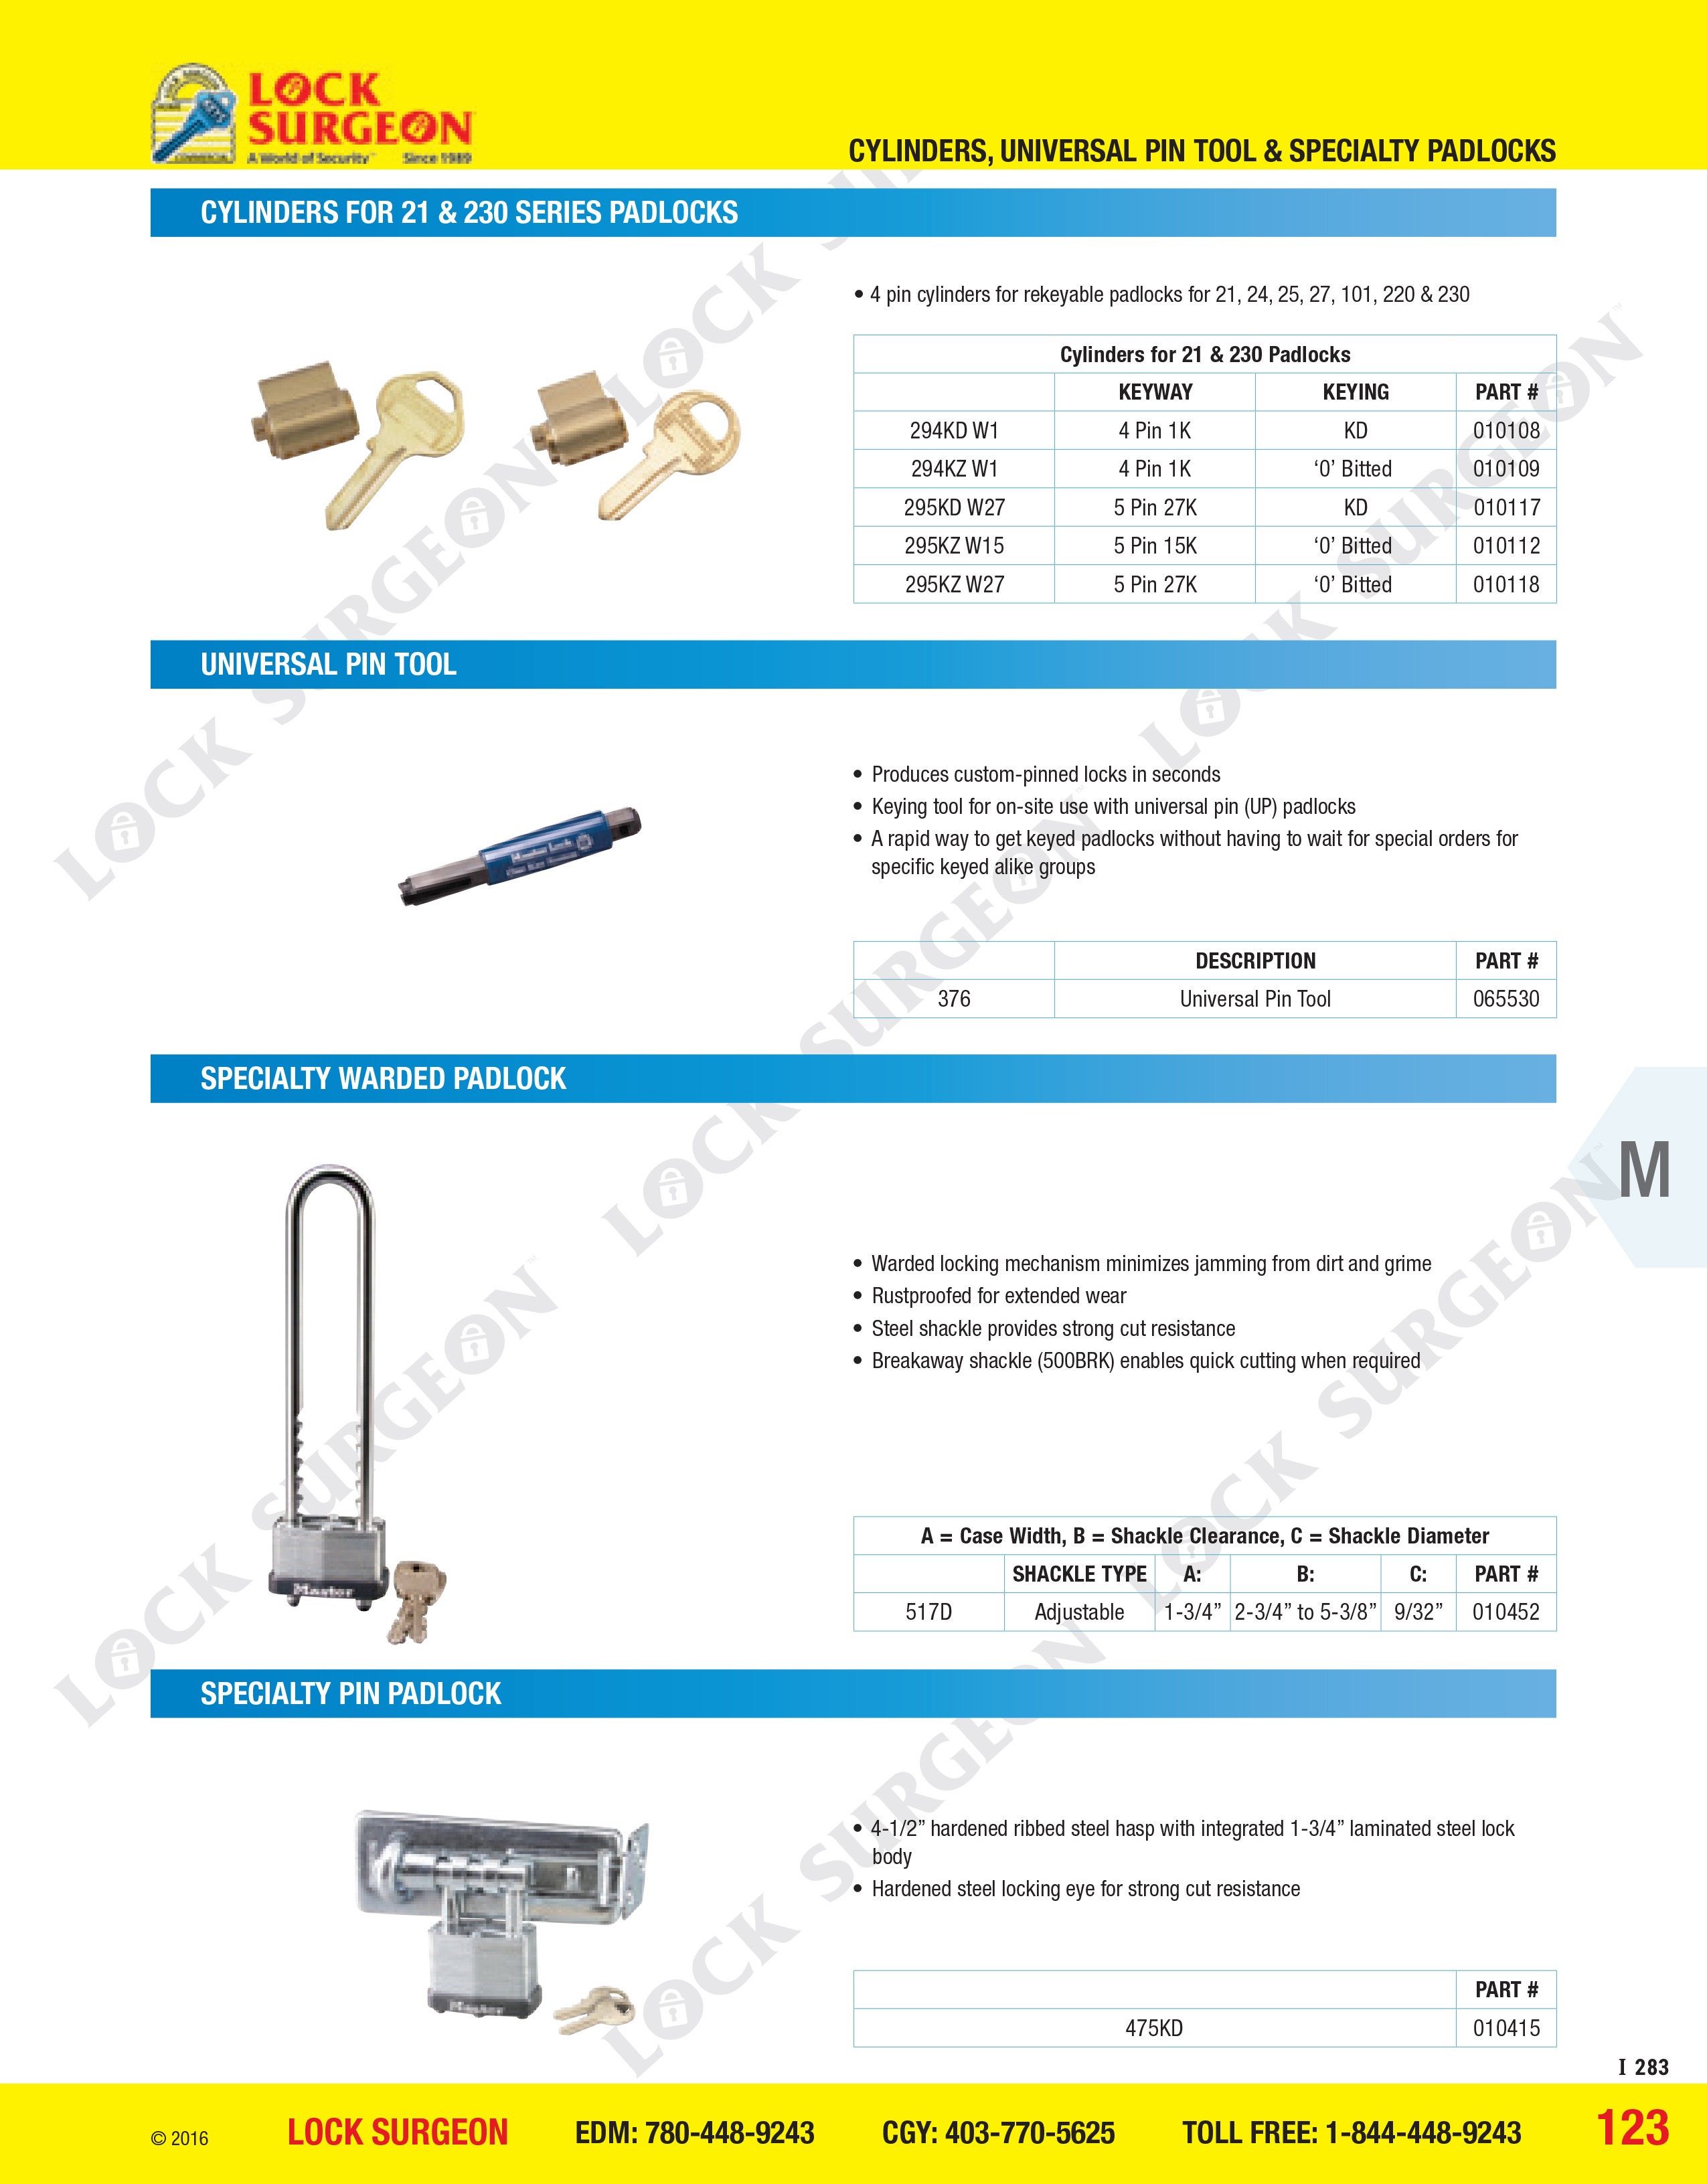 21 & 230 series padlock cylinder universal pin tool specialty warded padlock & specialty pin padlock